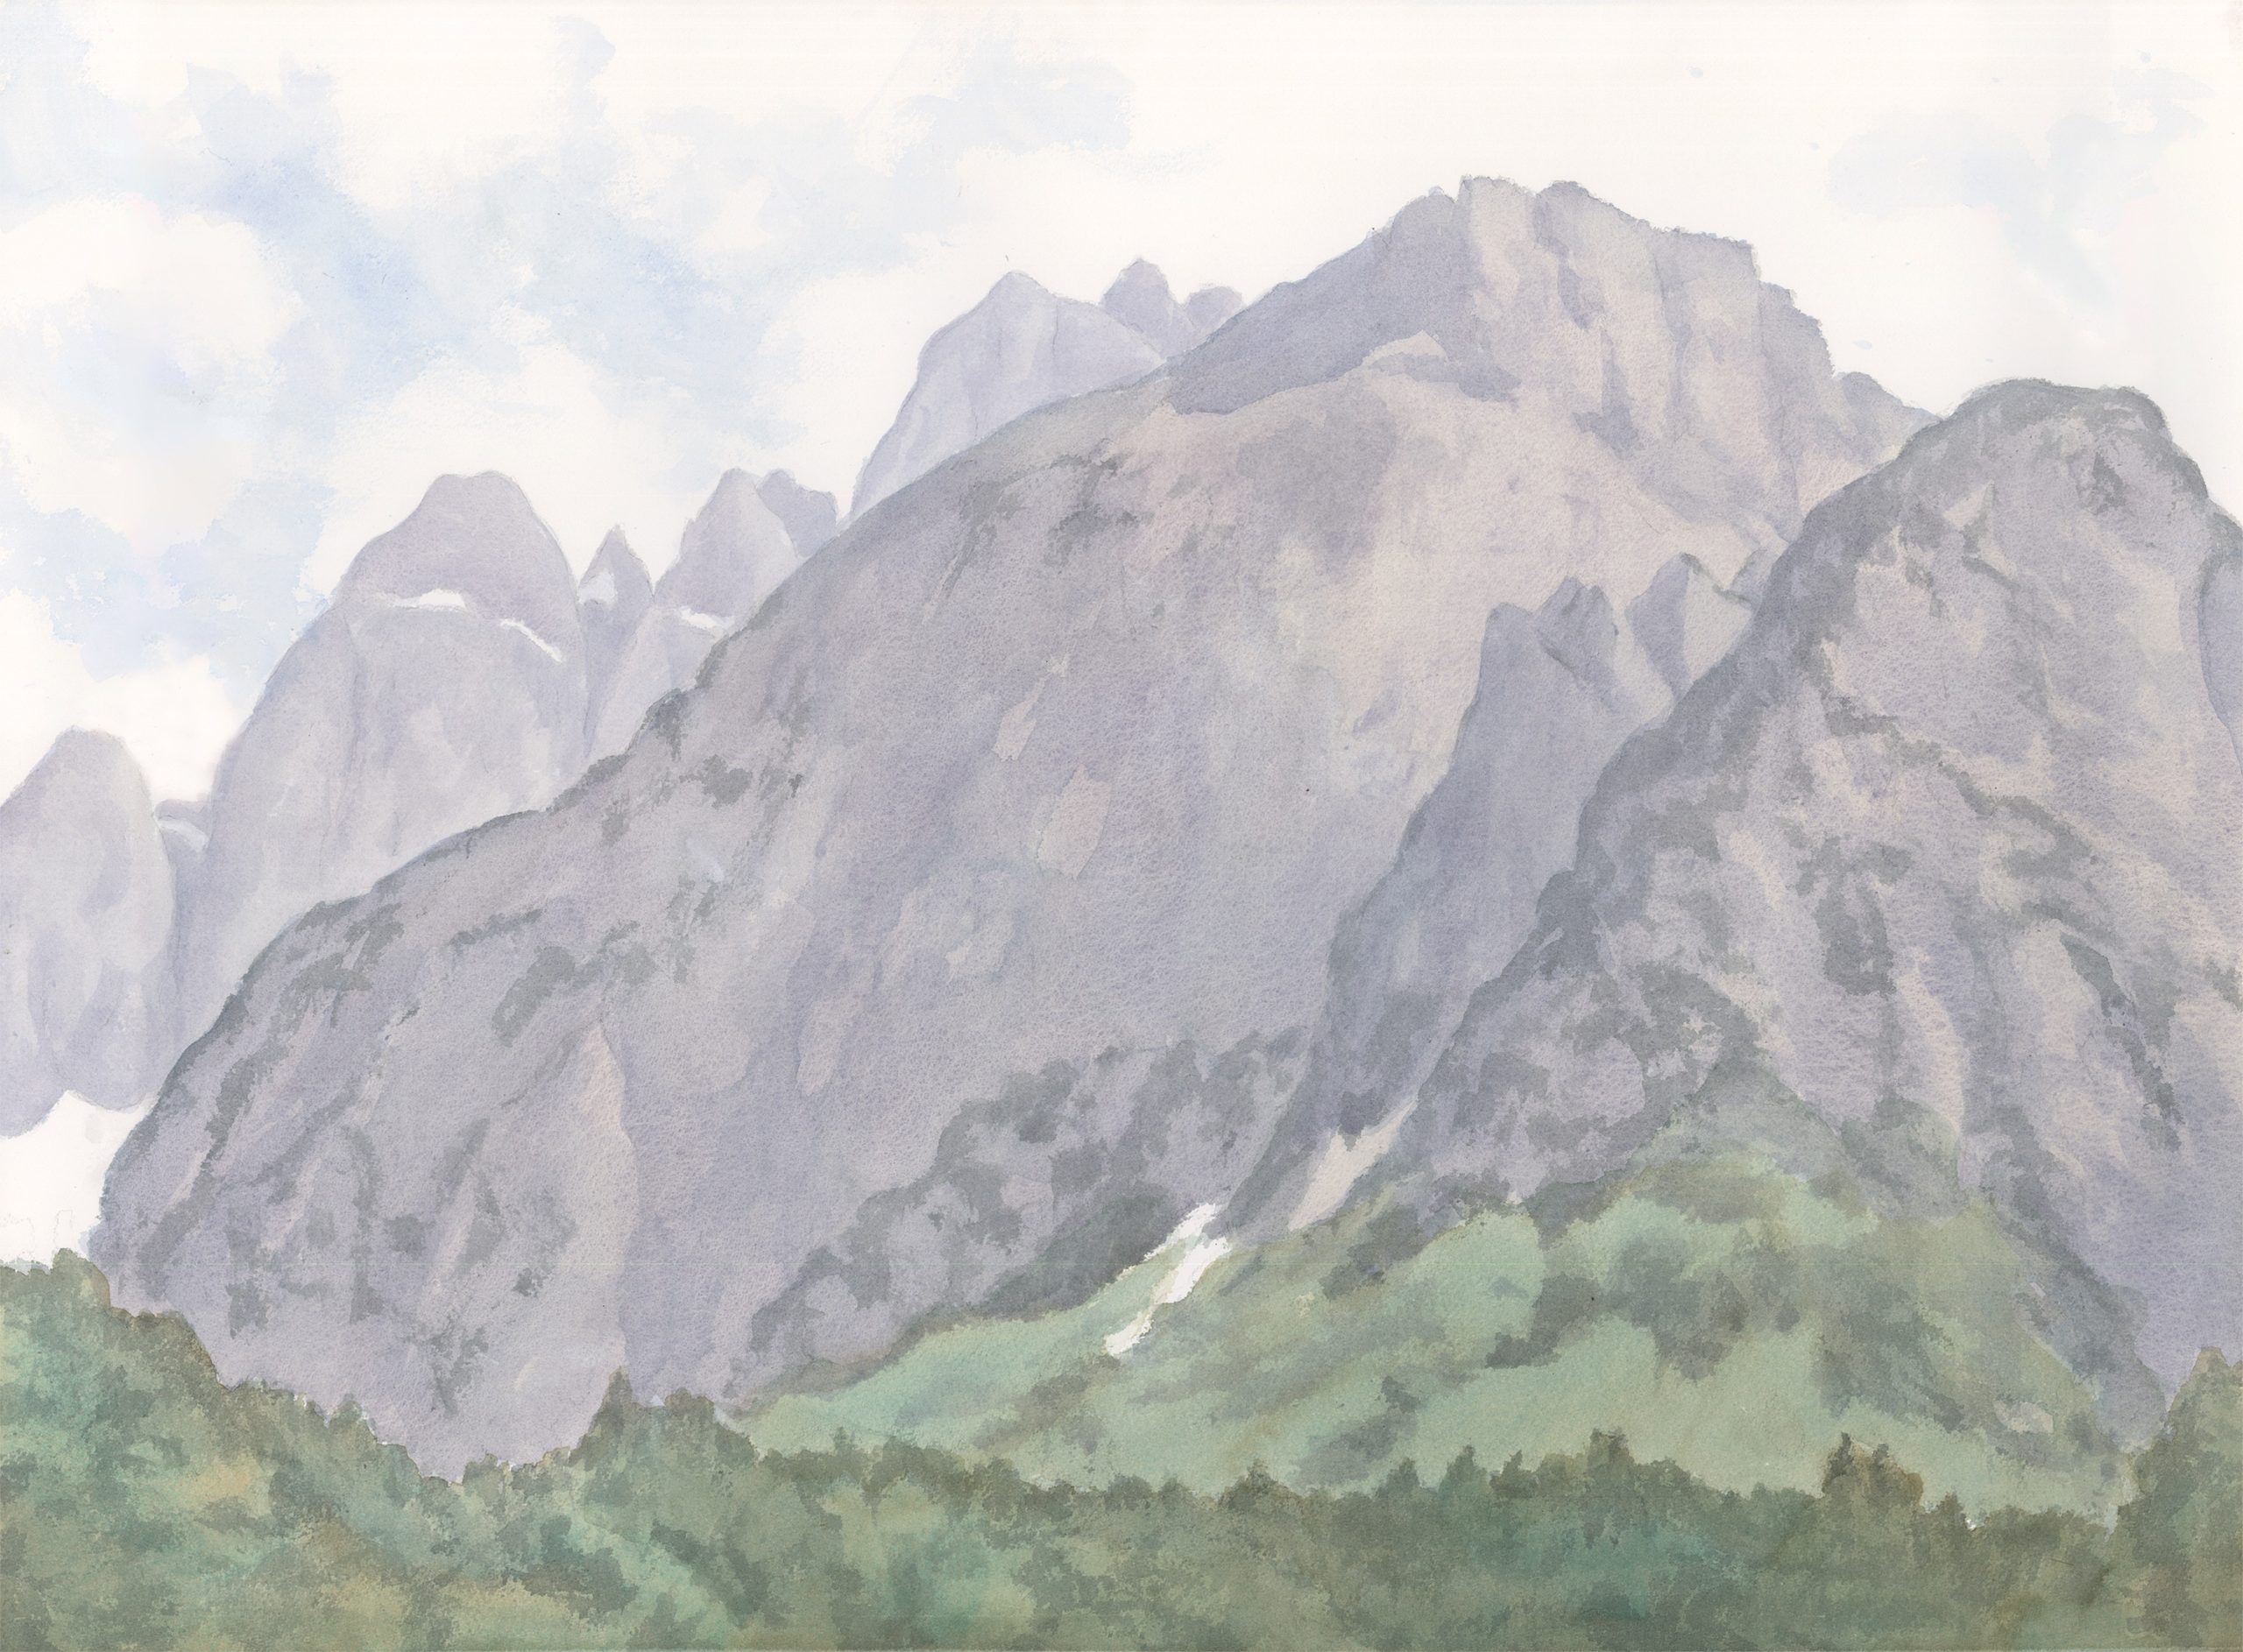 Riccarda de Eccher, NABOIS, 2018
Watercolor on paper, 22 x 30” Image courtesy of the artist